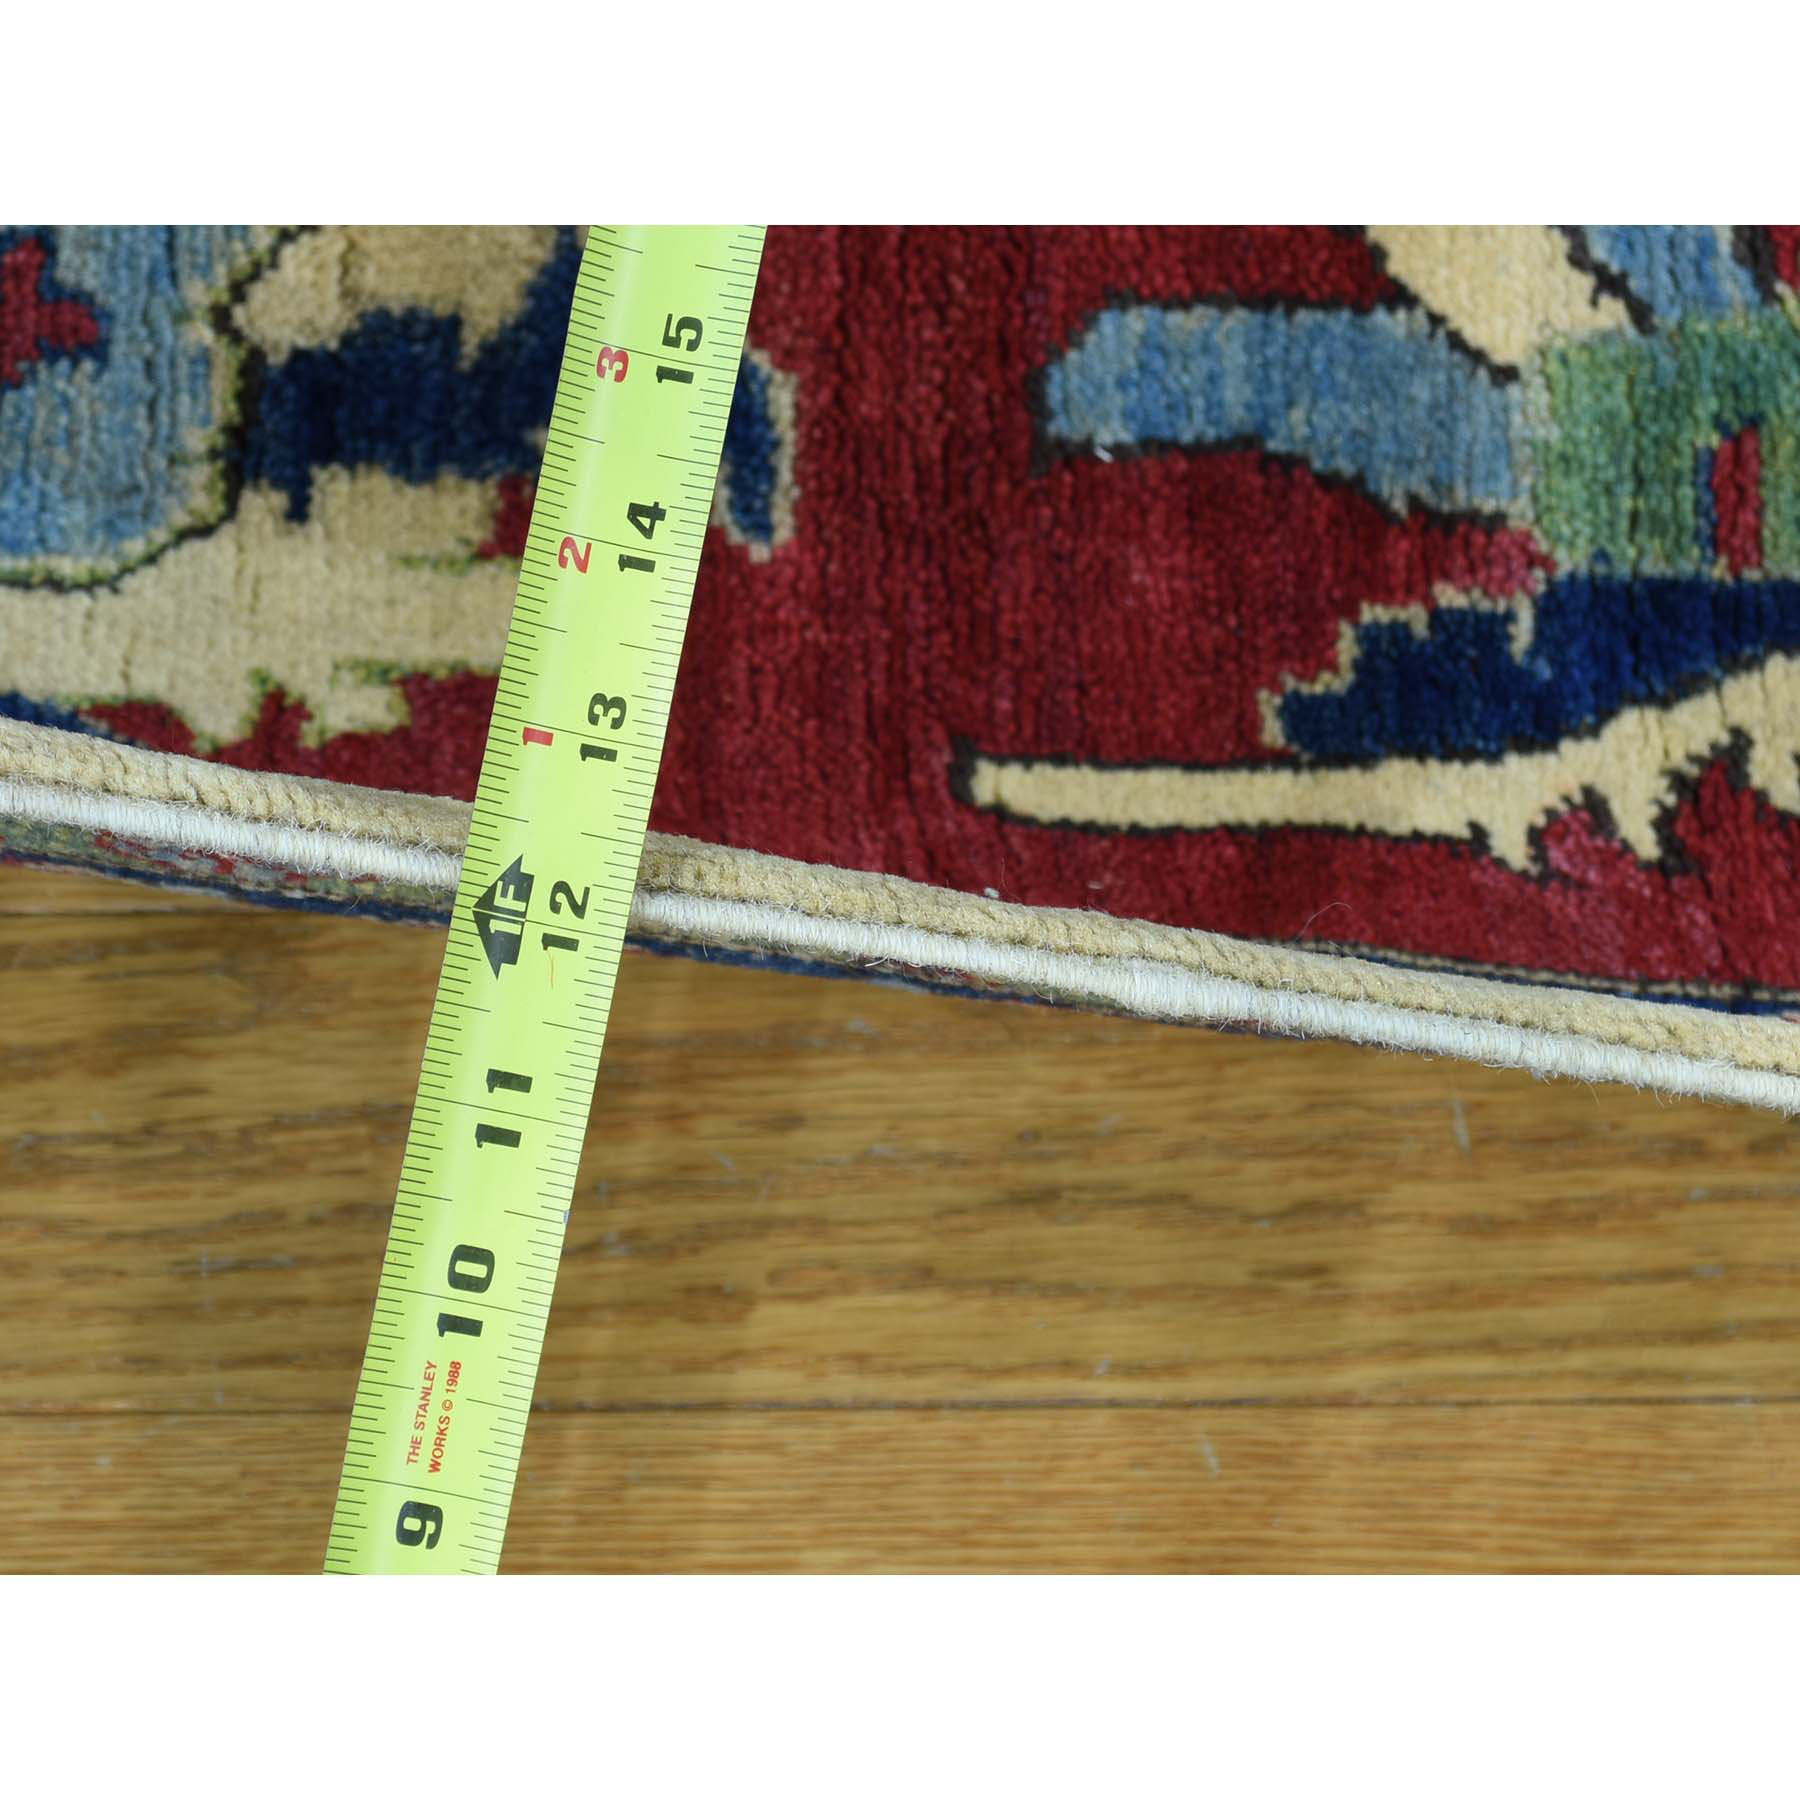 9-10 x14- Hand-Knotted Kazak Pure Wool Geometric Design Oriental Rug 